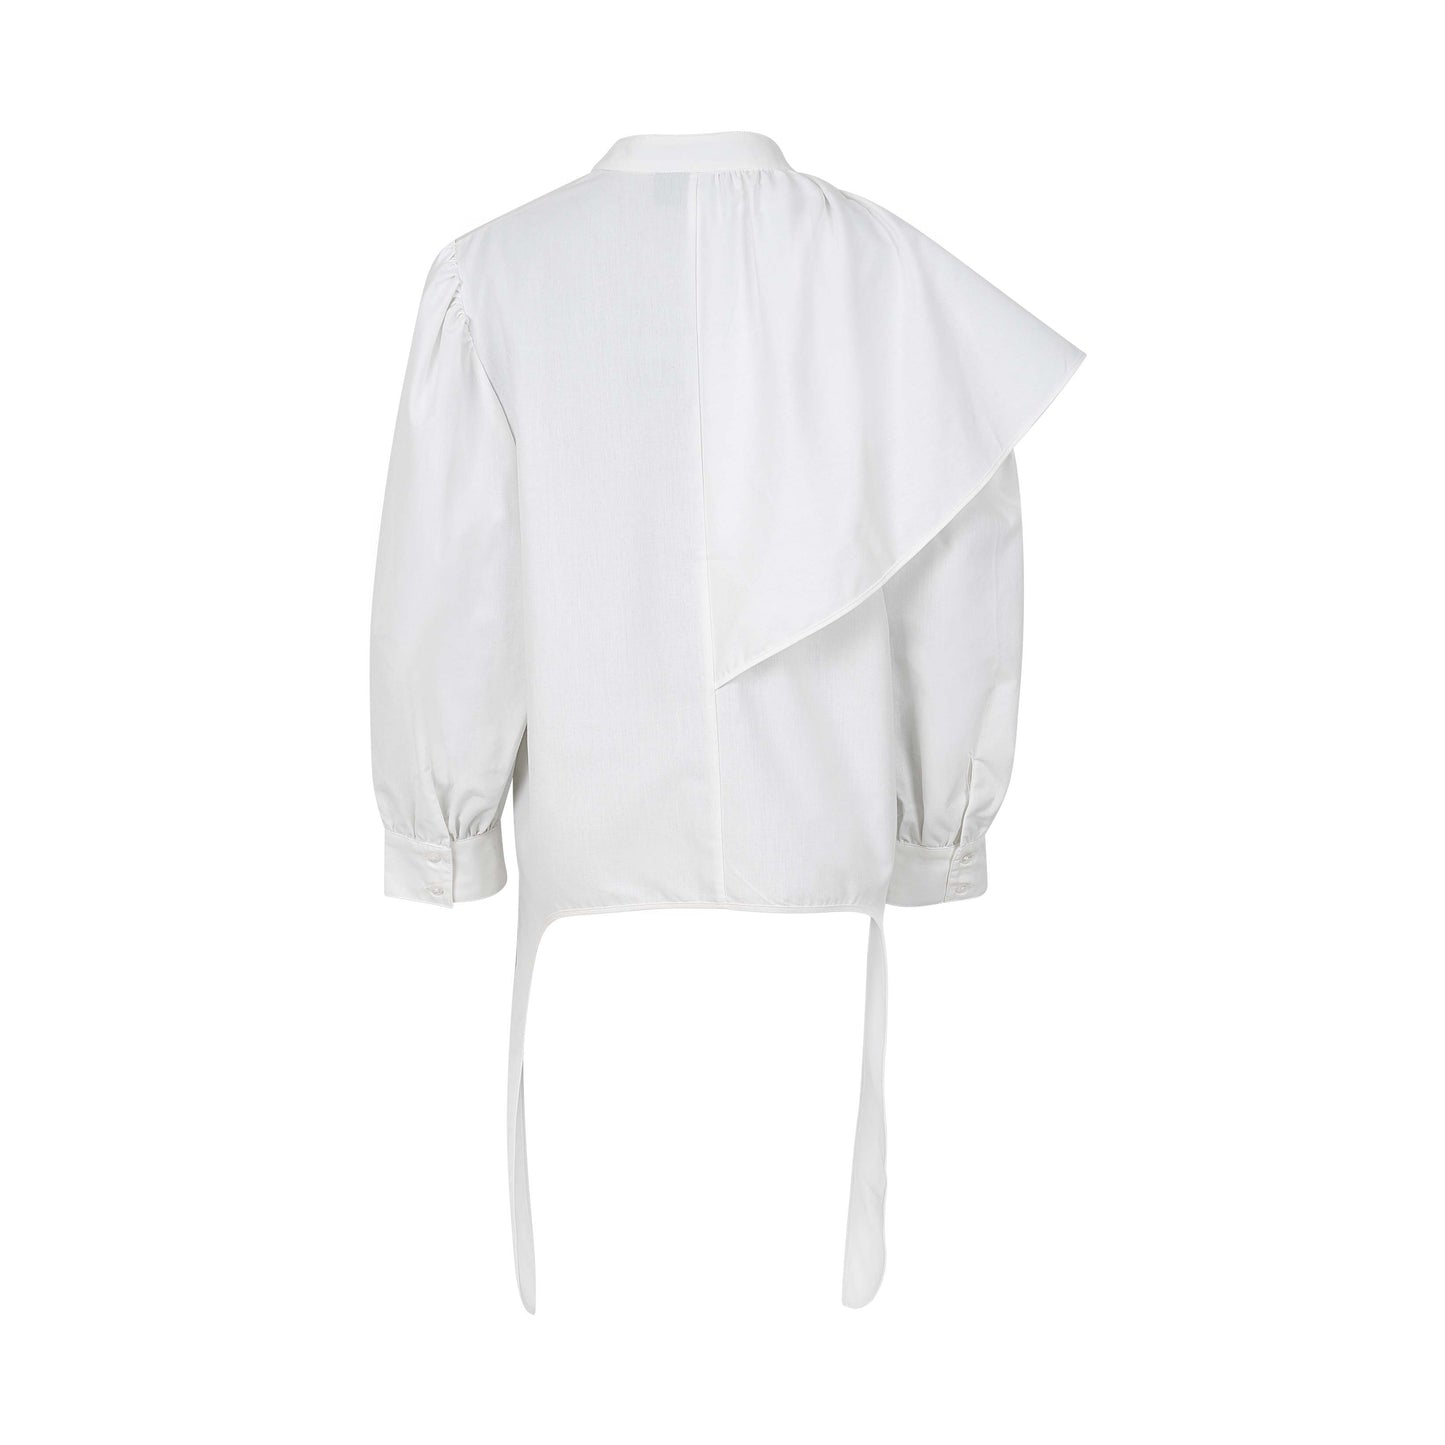 Mandana shirt // Bright White